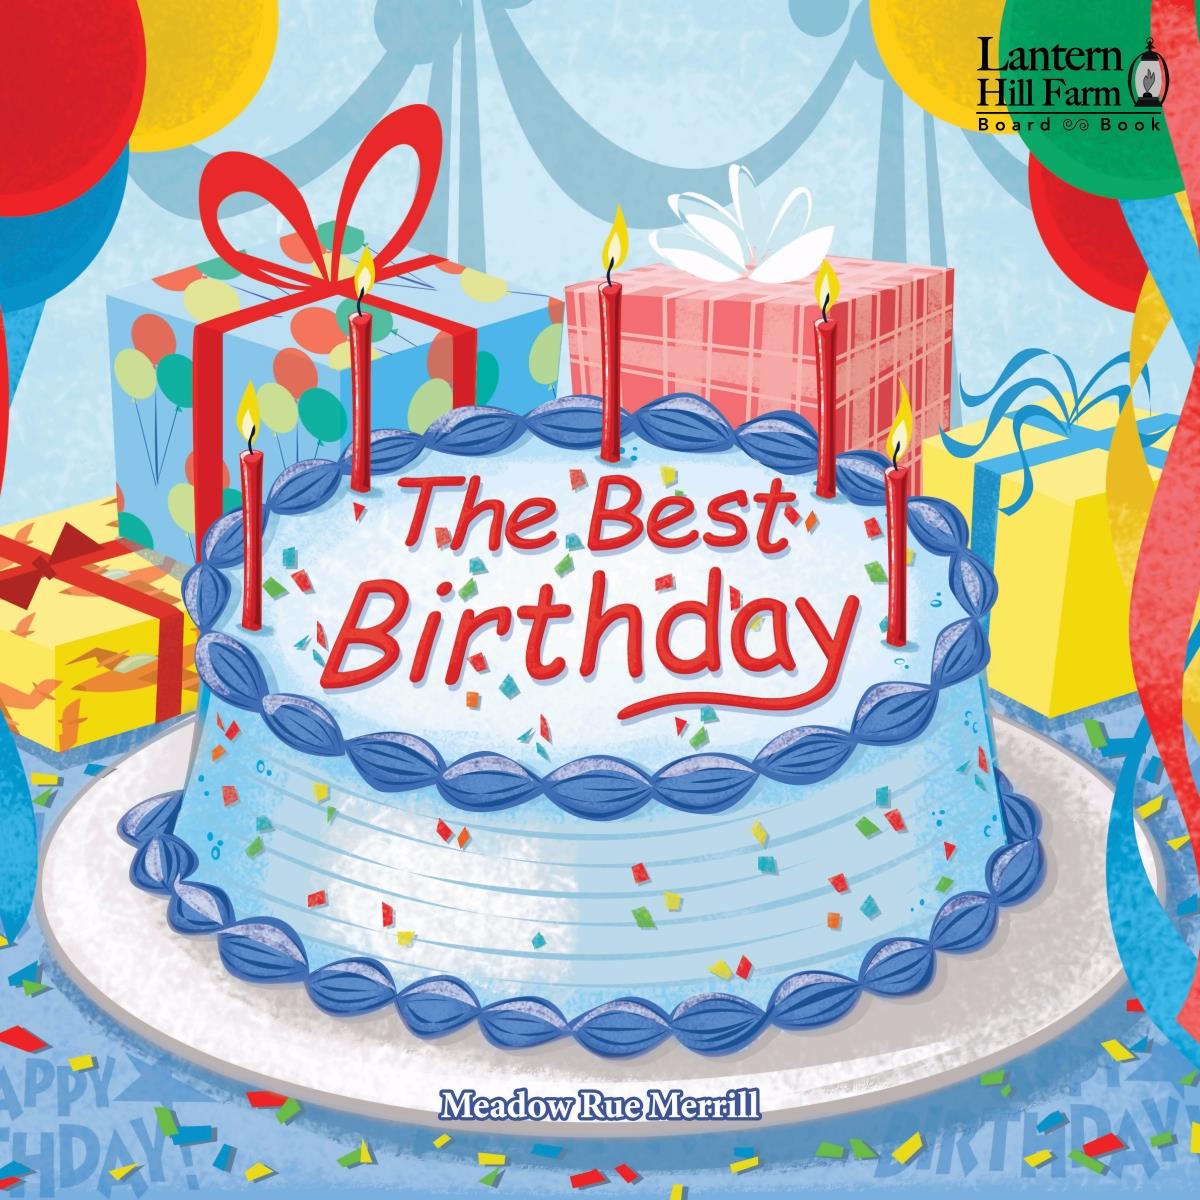 163786 The Best Birthday Board Book